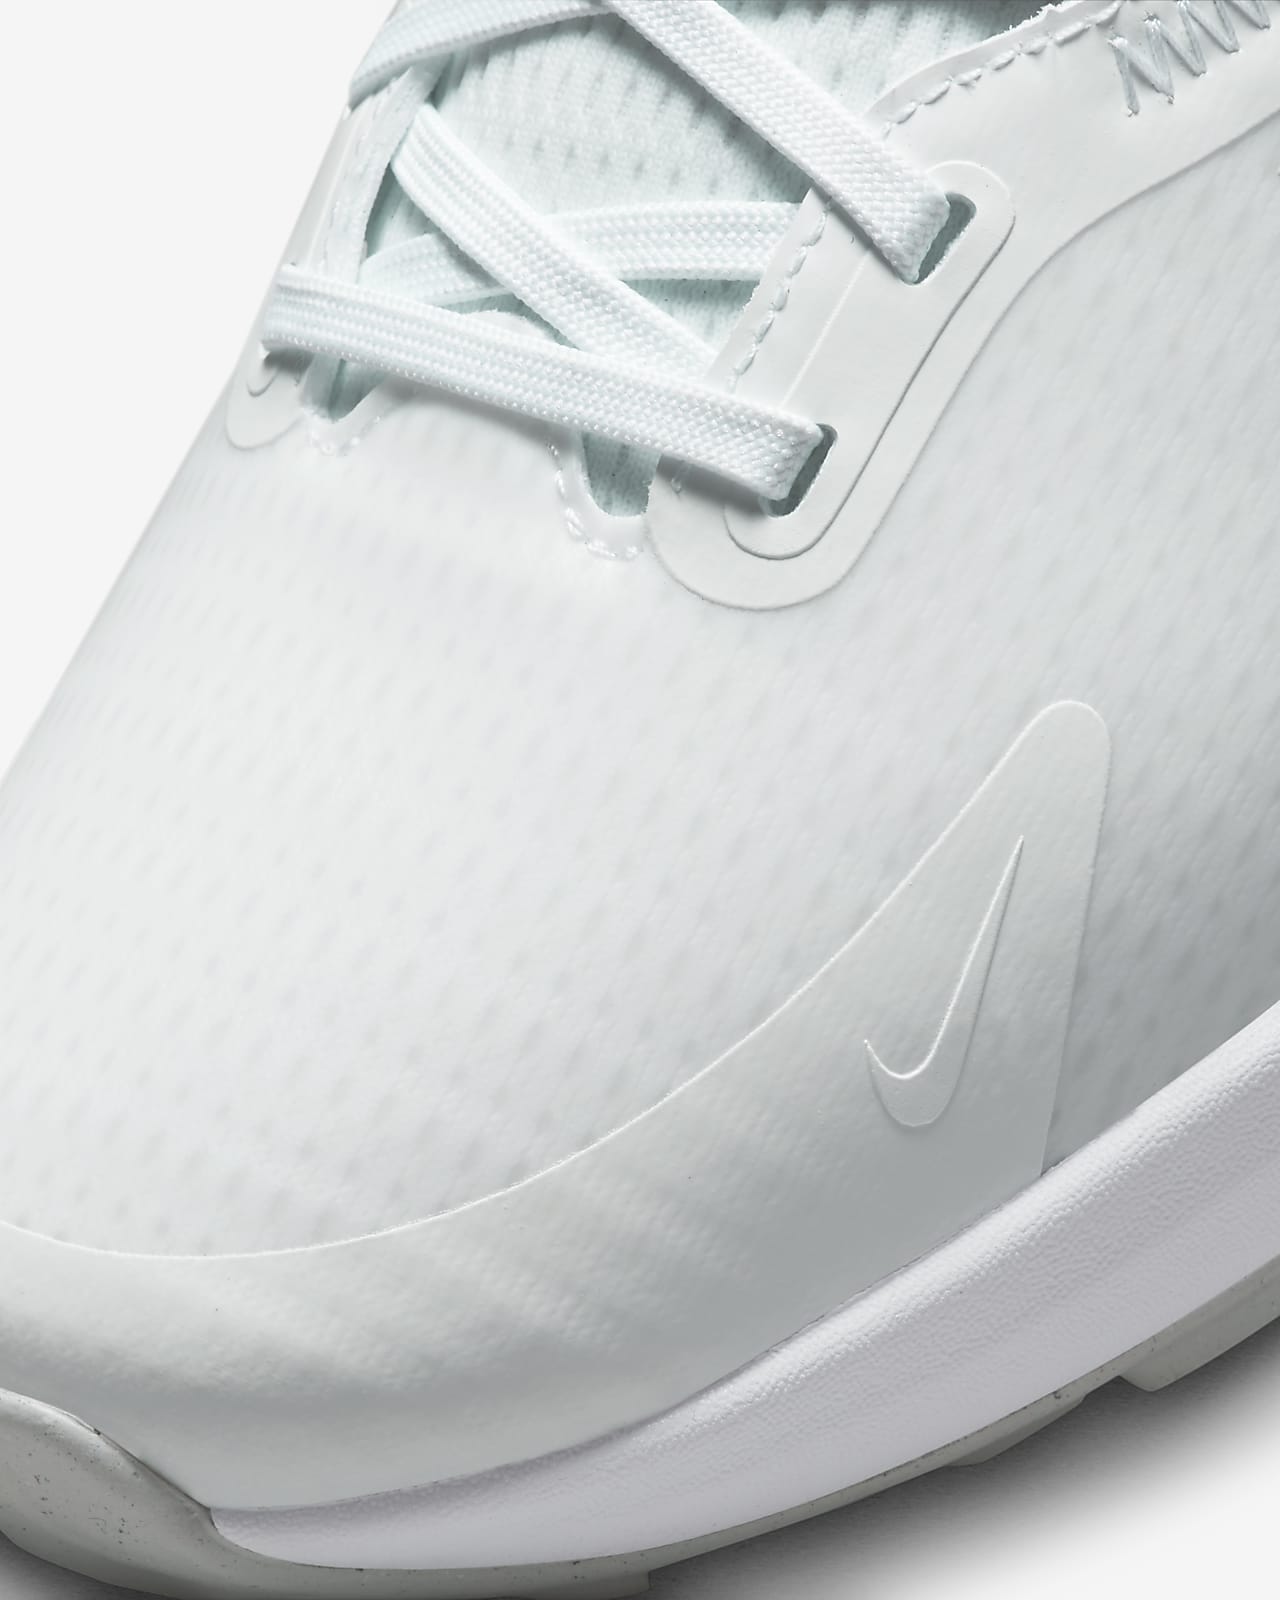 Nike Infinity Pro 2 Men's Golf Shoes (Wide)